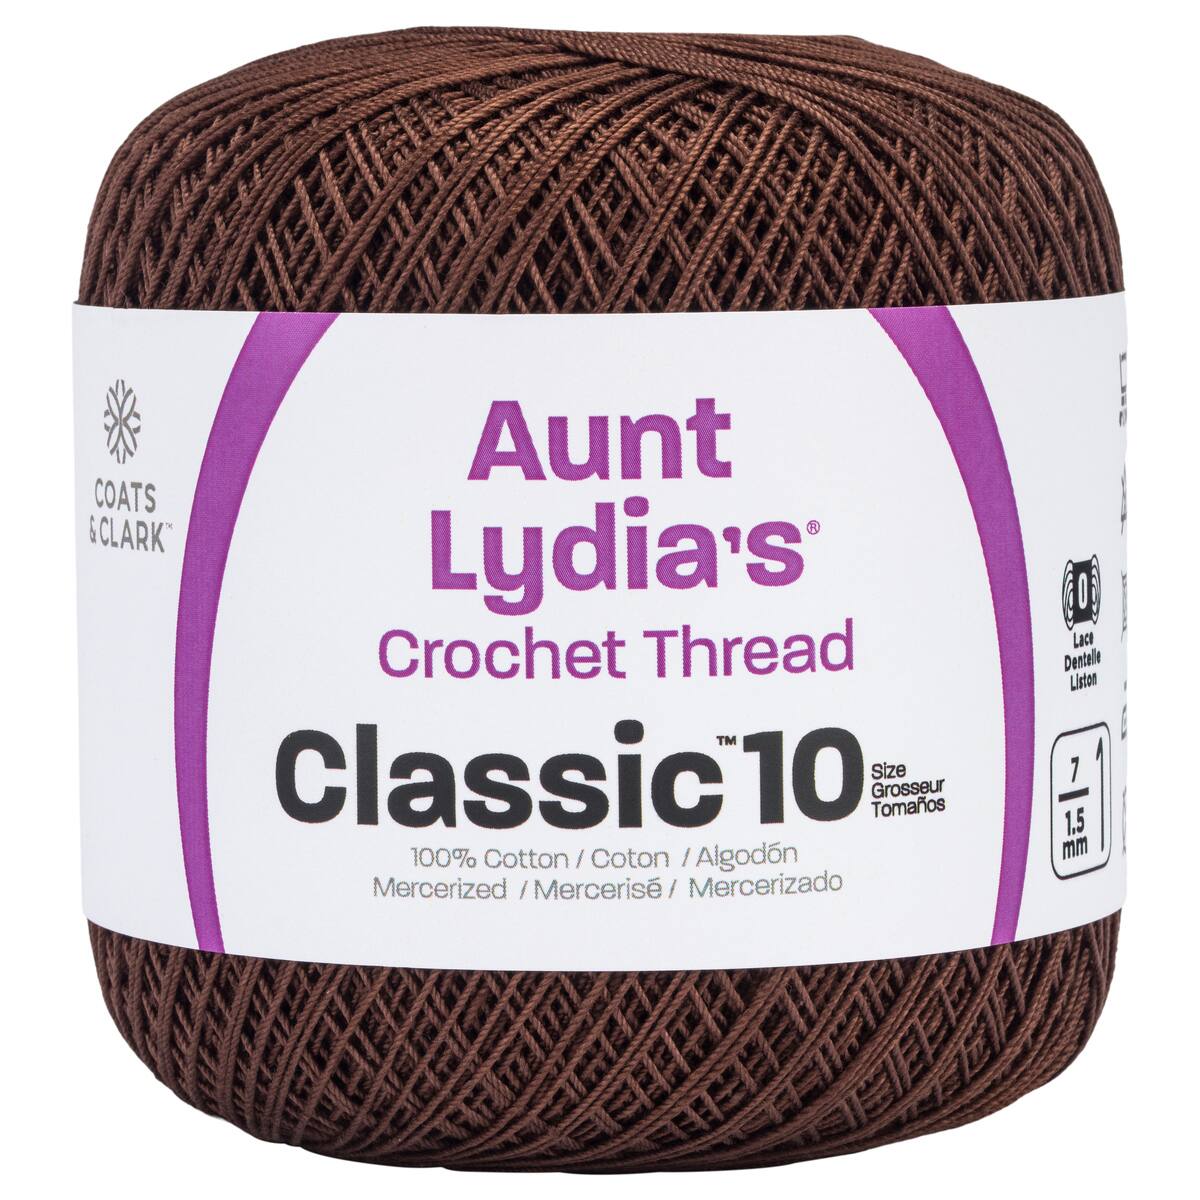 Aunt Lydia's Crochet Thread Classic 10 